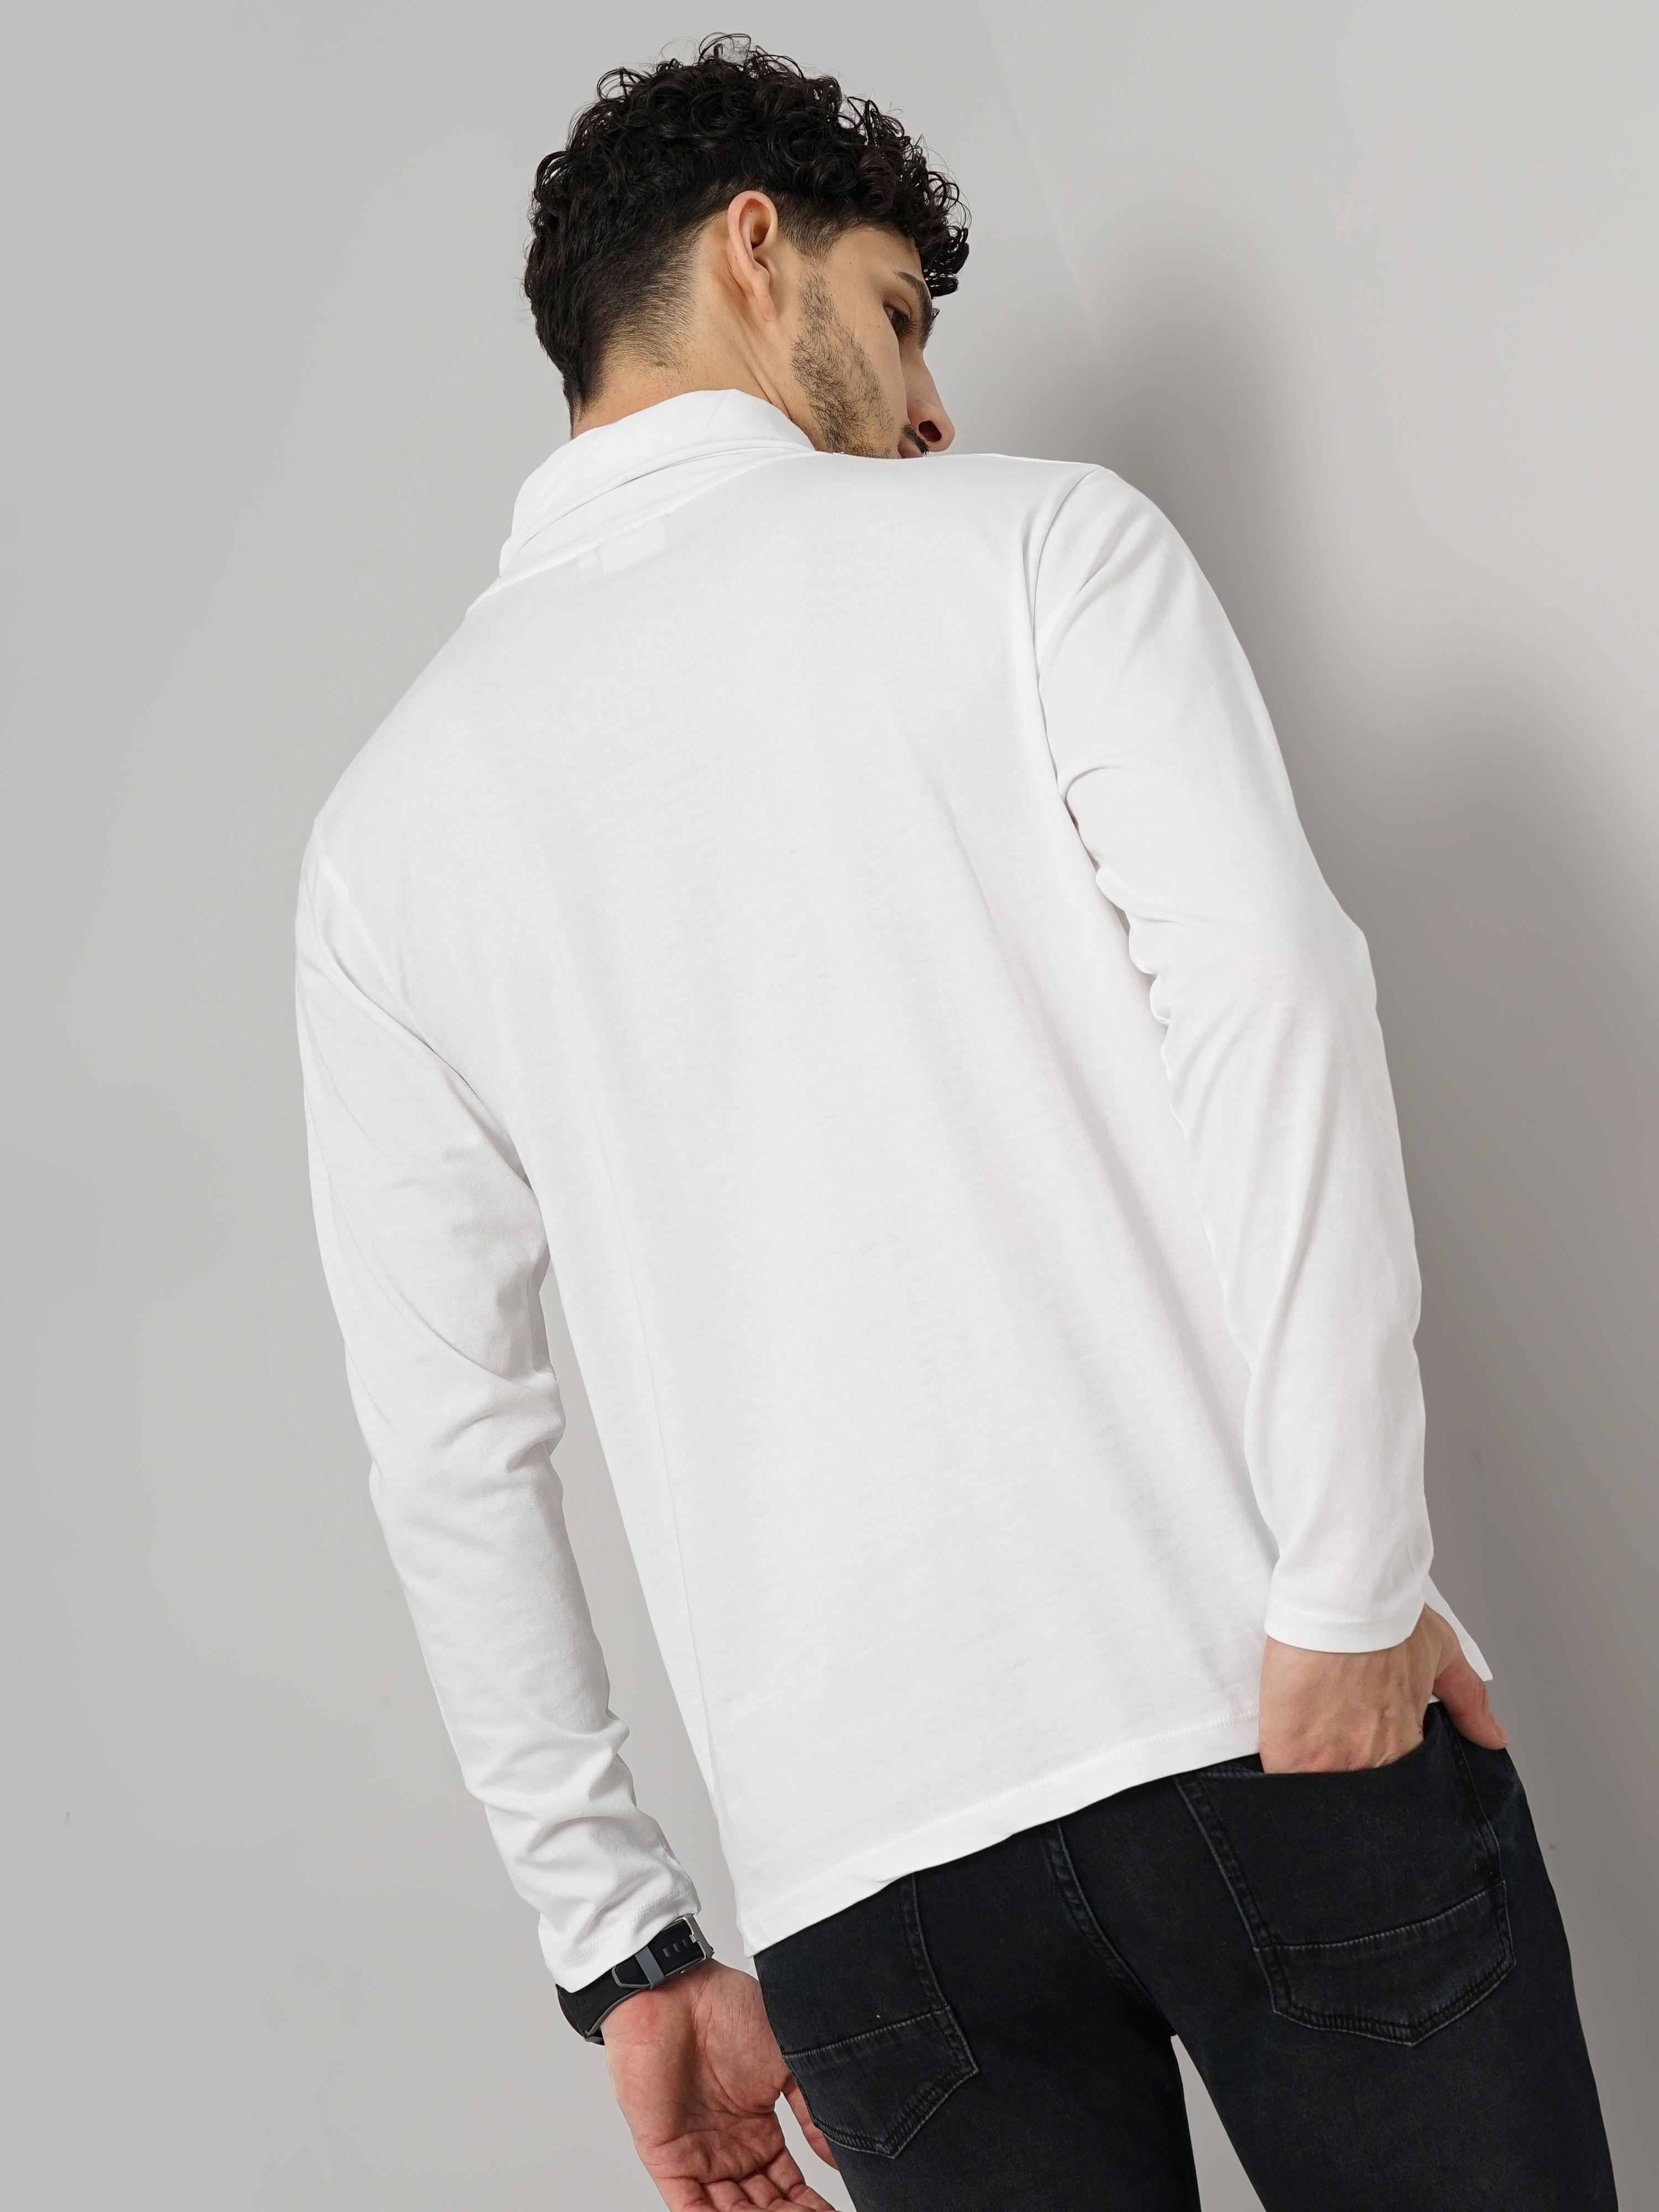 Celio Men's Solid White Full Sleeve Turtle Neck Fashion Tshirt